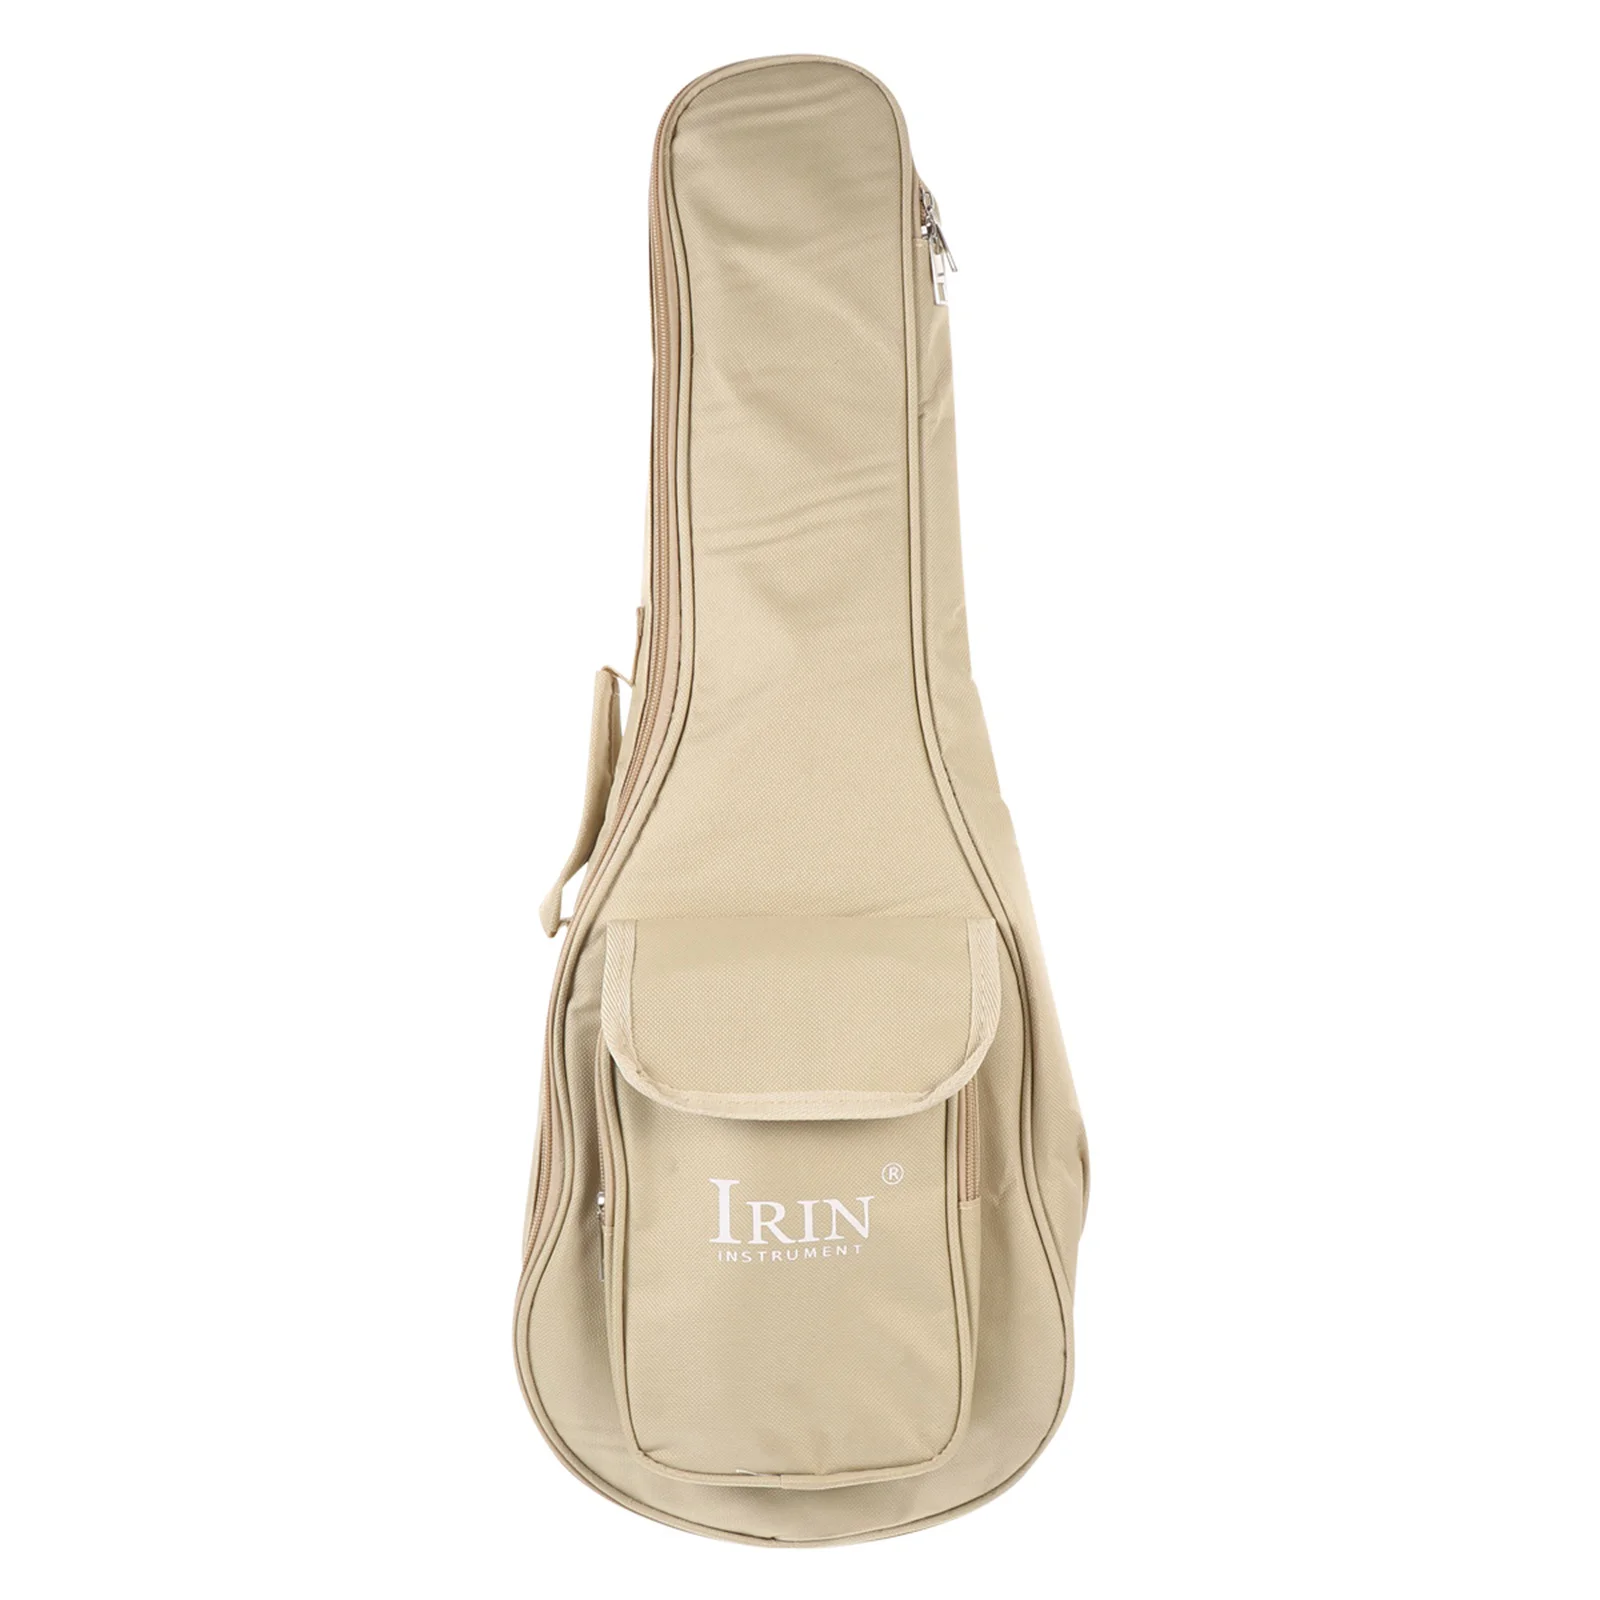 

Ukulele Bag Bags Storage Case Shoulders Instrument 600d Oxford Cloth Pouch Guitar with Pockets